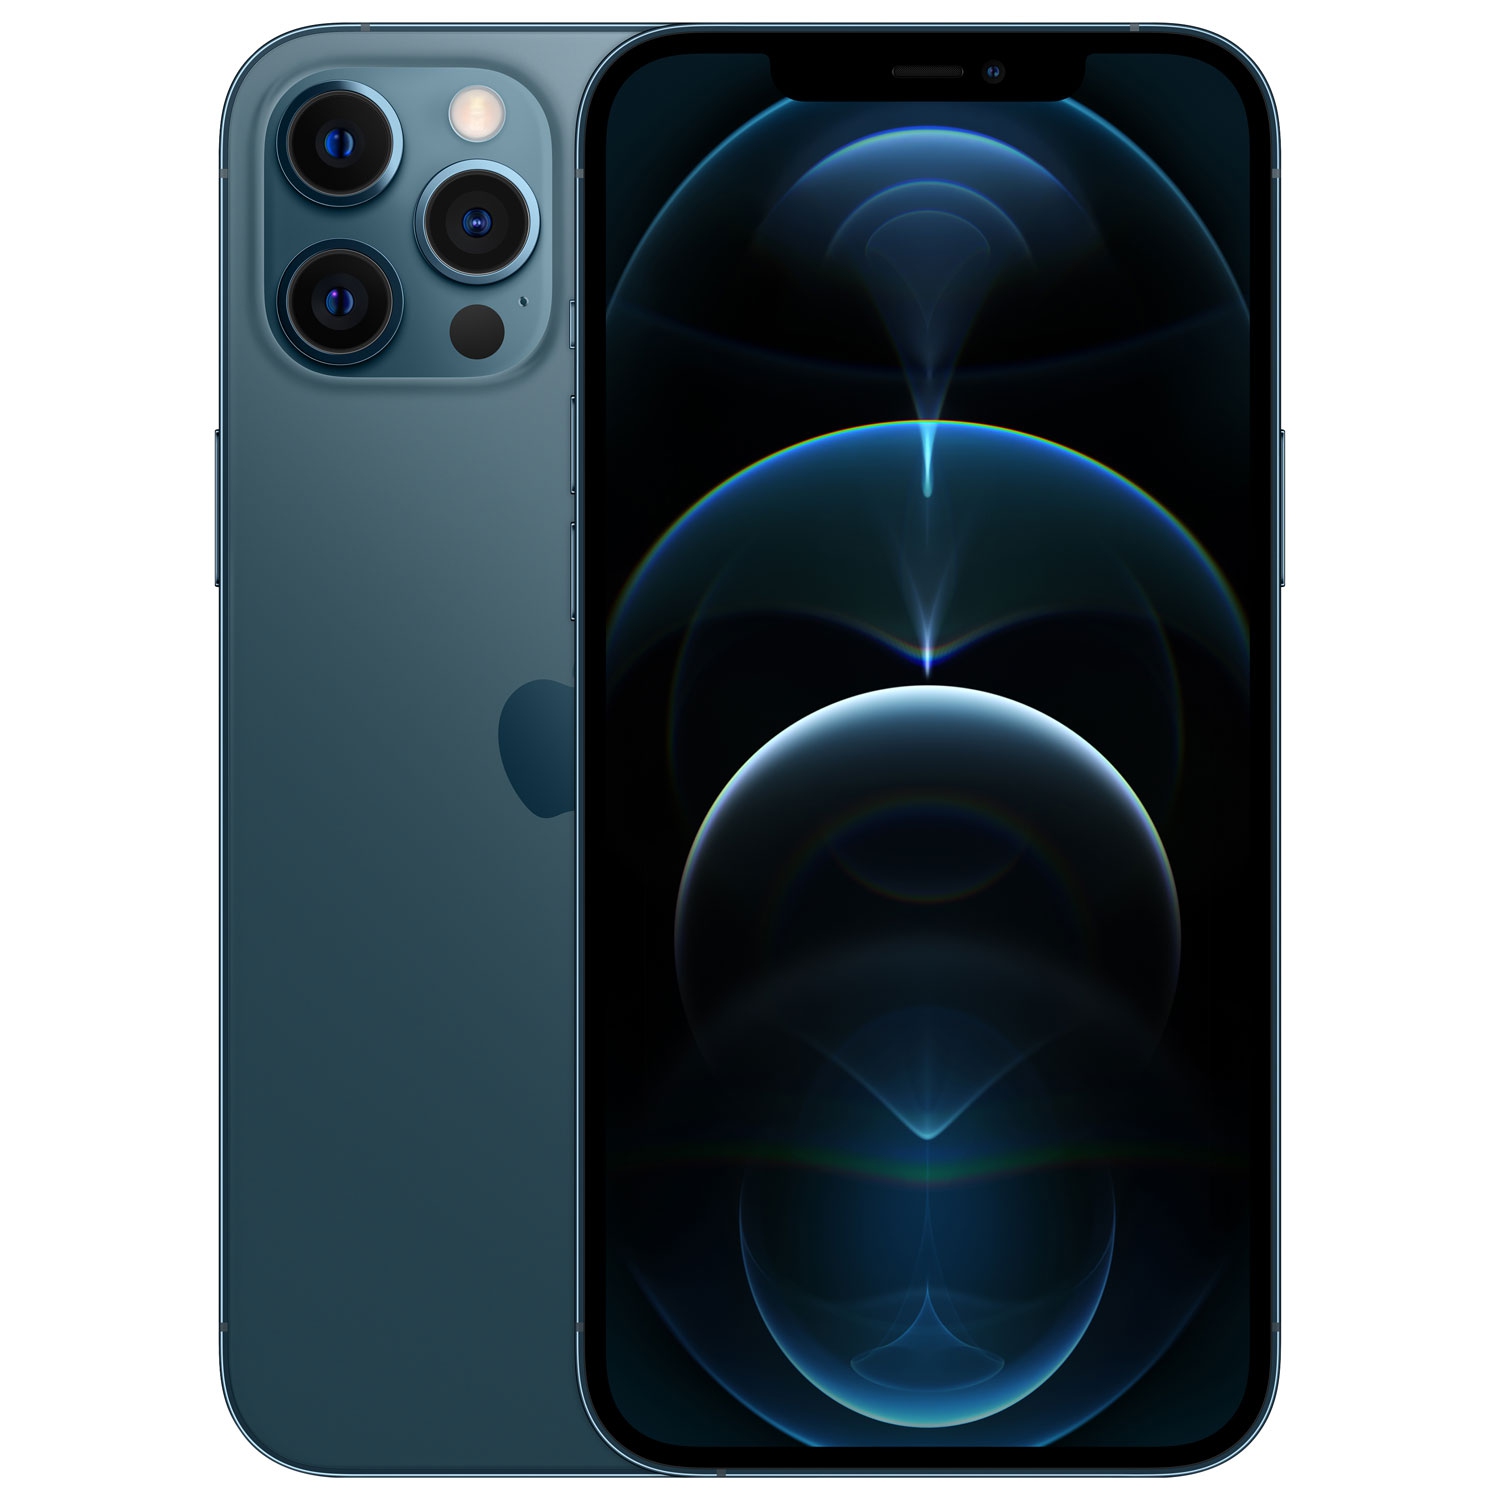 Apple iPhone 12 Pro Max 128GB Smartphone - Pacific Blue - Unlocked - Open Box